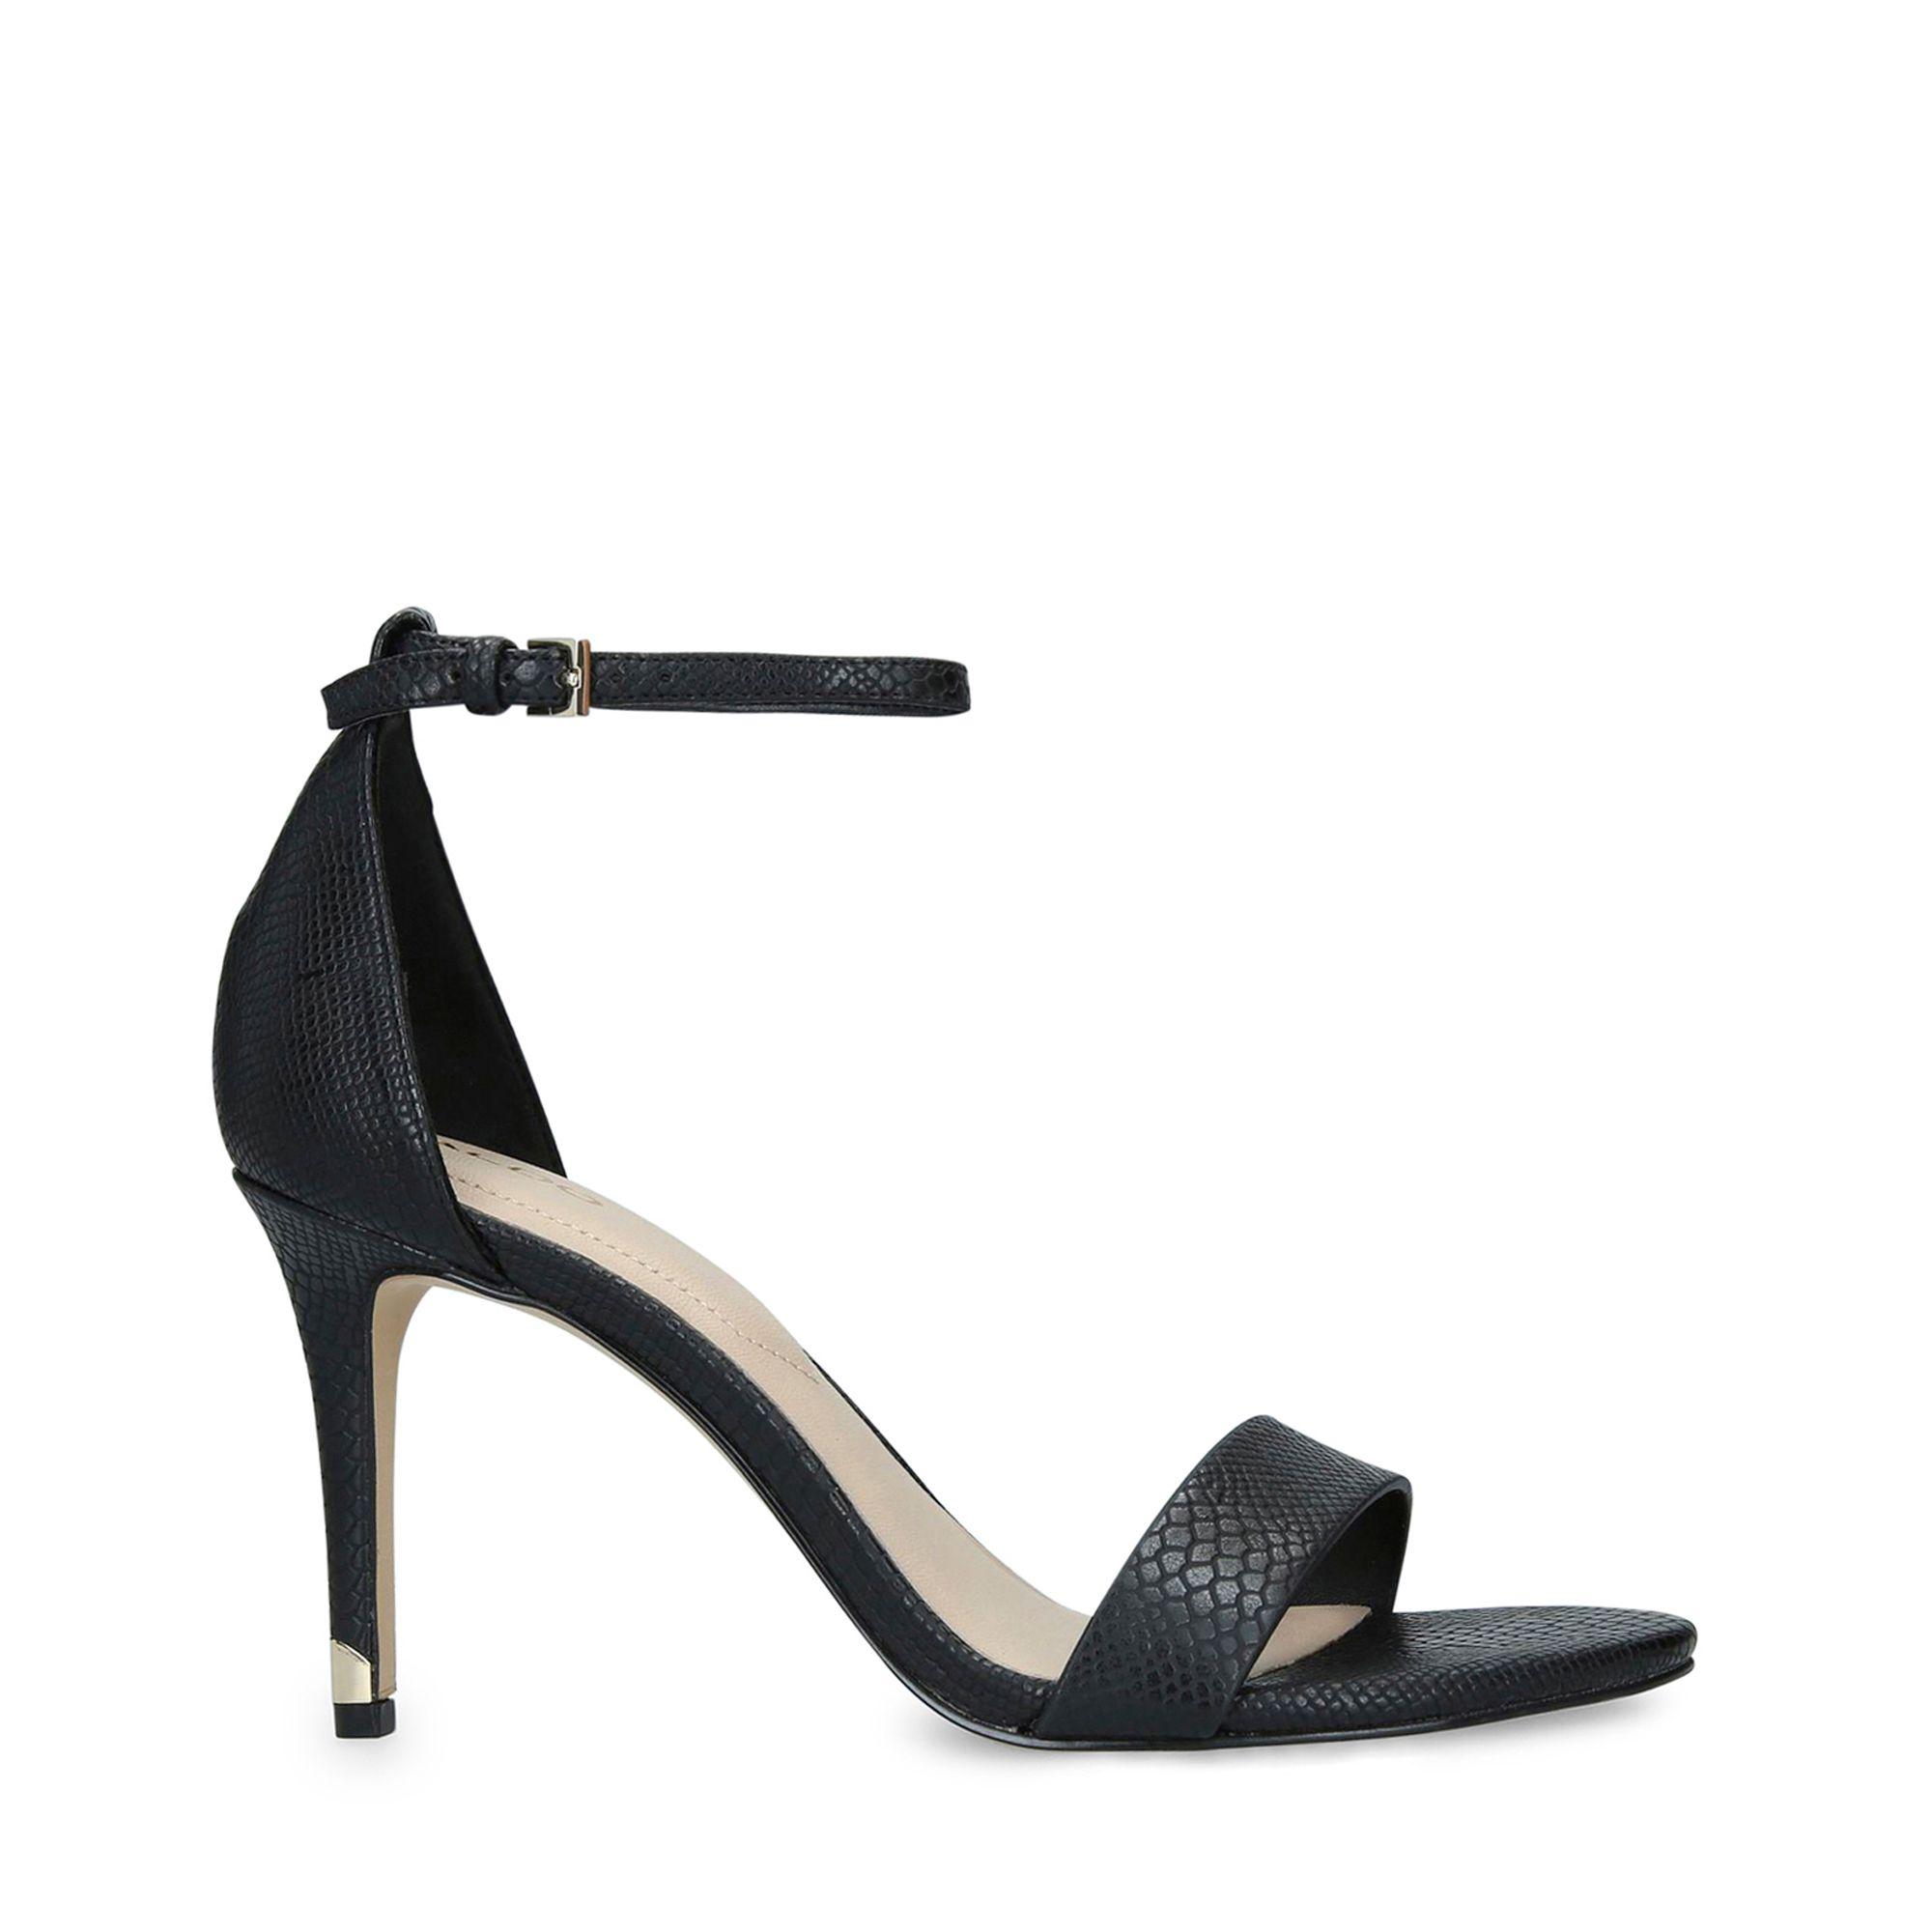 ALDO 'eriressi' Heel Sandals With Ankle Strap in Black - Lyst